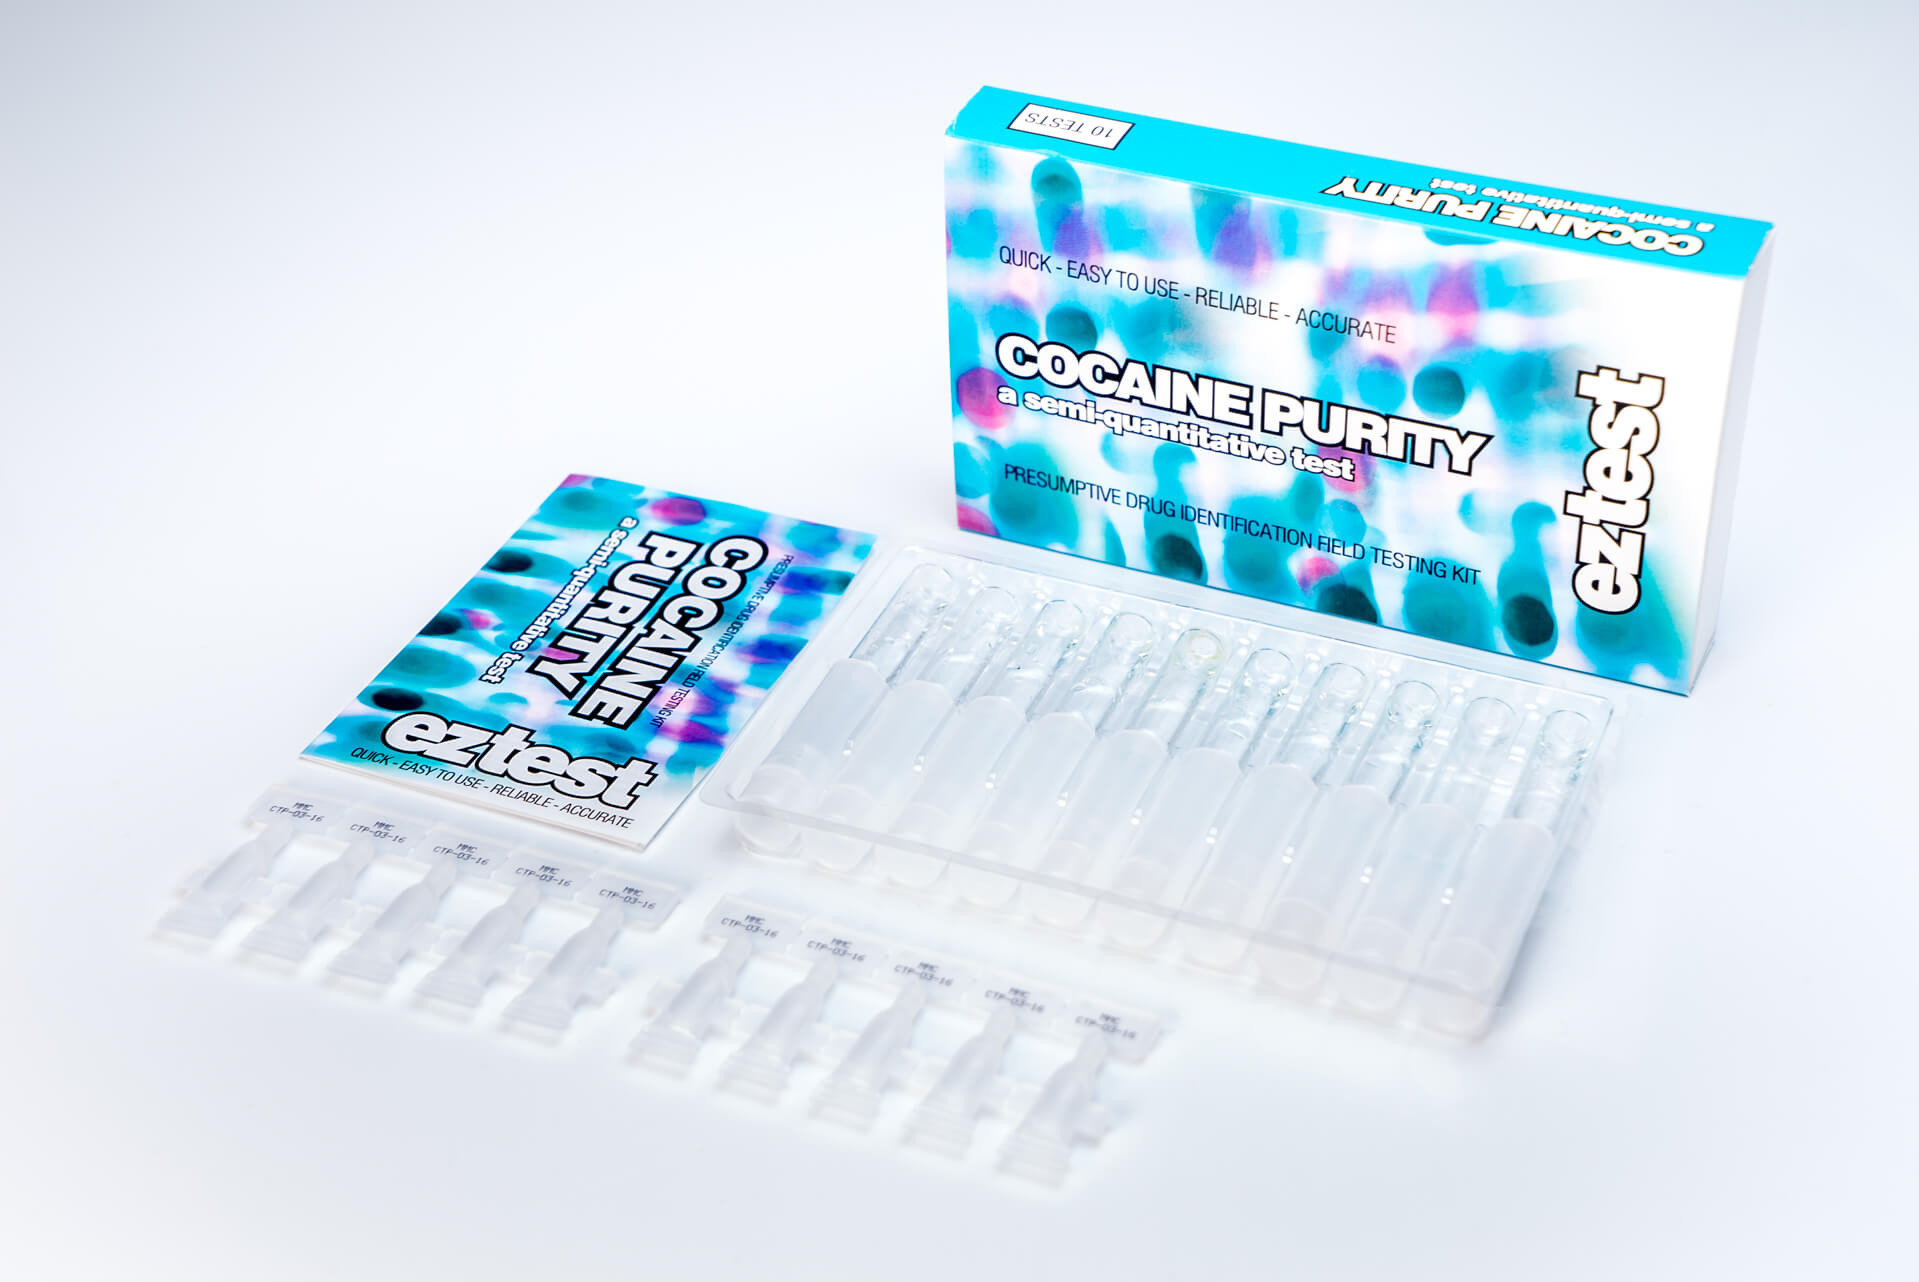 Cocaine Purity 10 Use Drug Testing Kit - Home Drug Testing Kits 